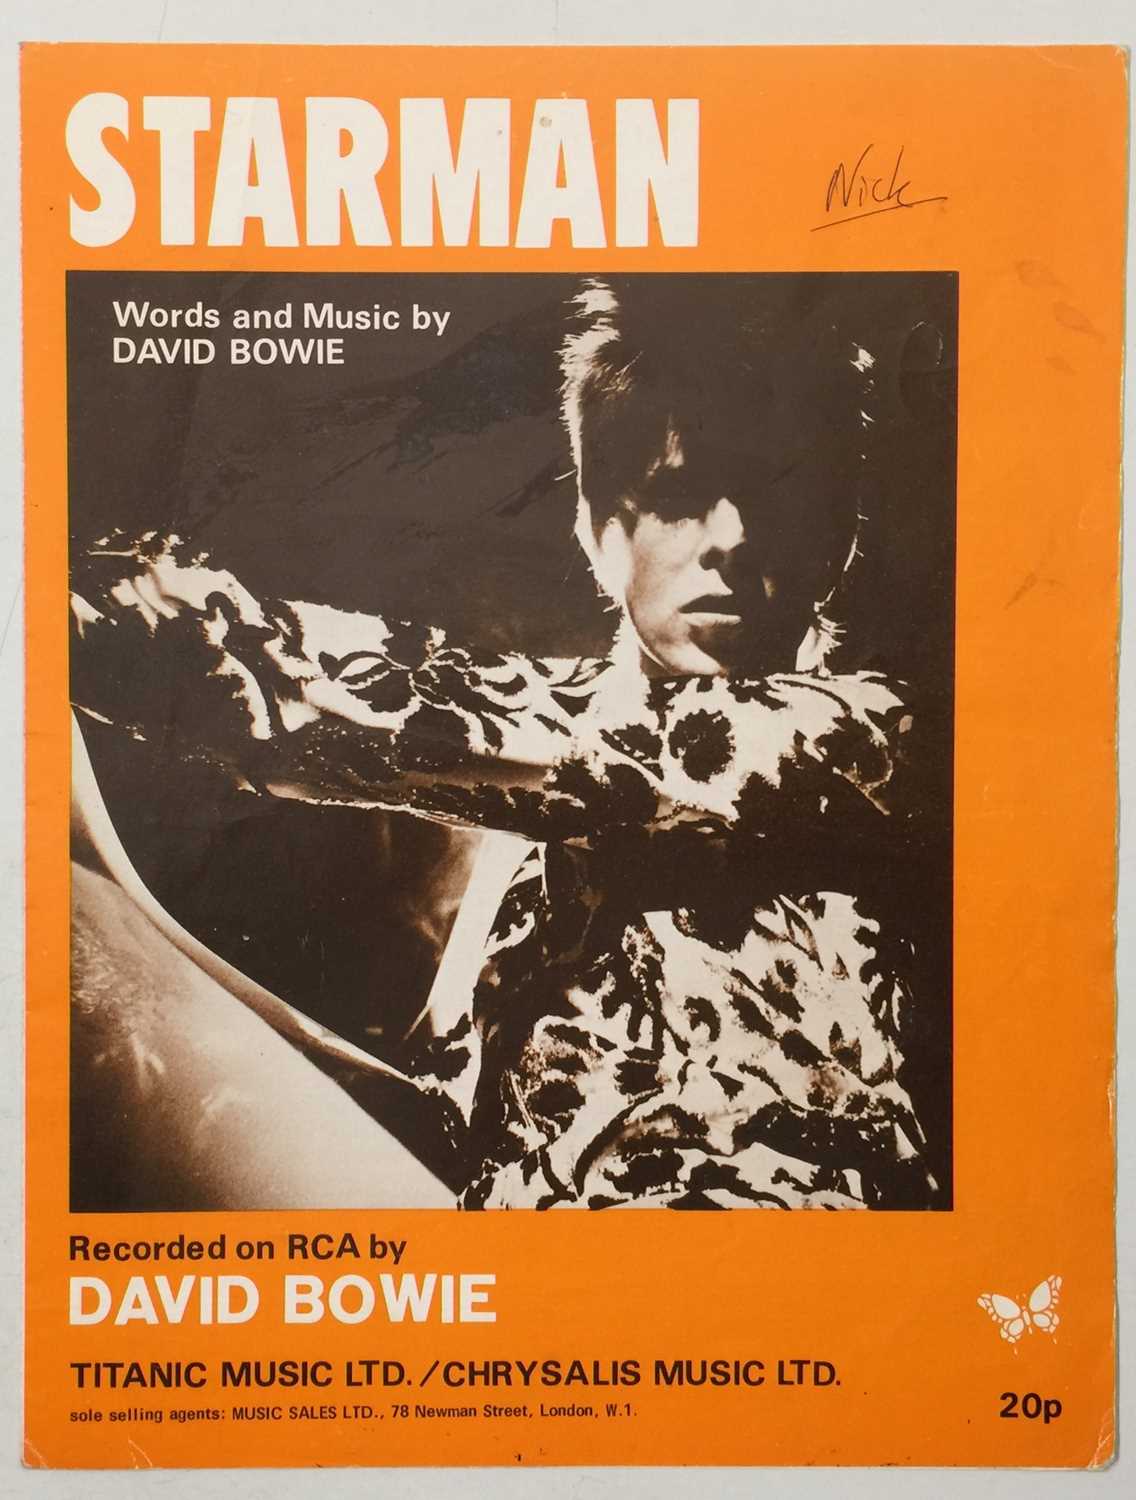 DAVID BOWIE - ZIGGY STARDUST - ORIGINAL UK WHITE LABEL TEST PRESSING (RCA VICTOR SF 8287) - Image 4 of 7